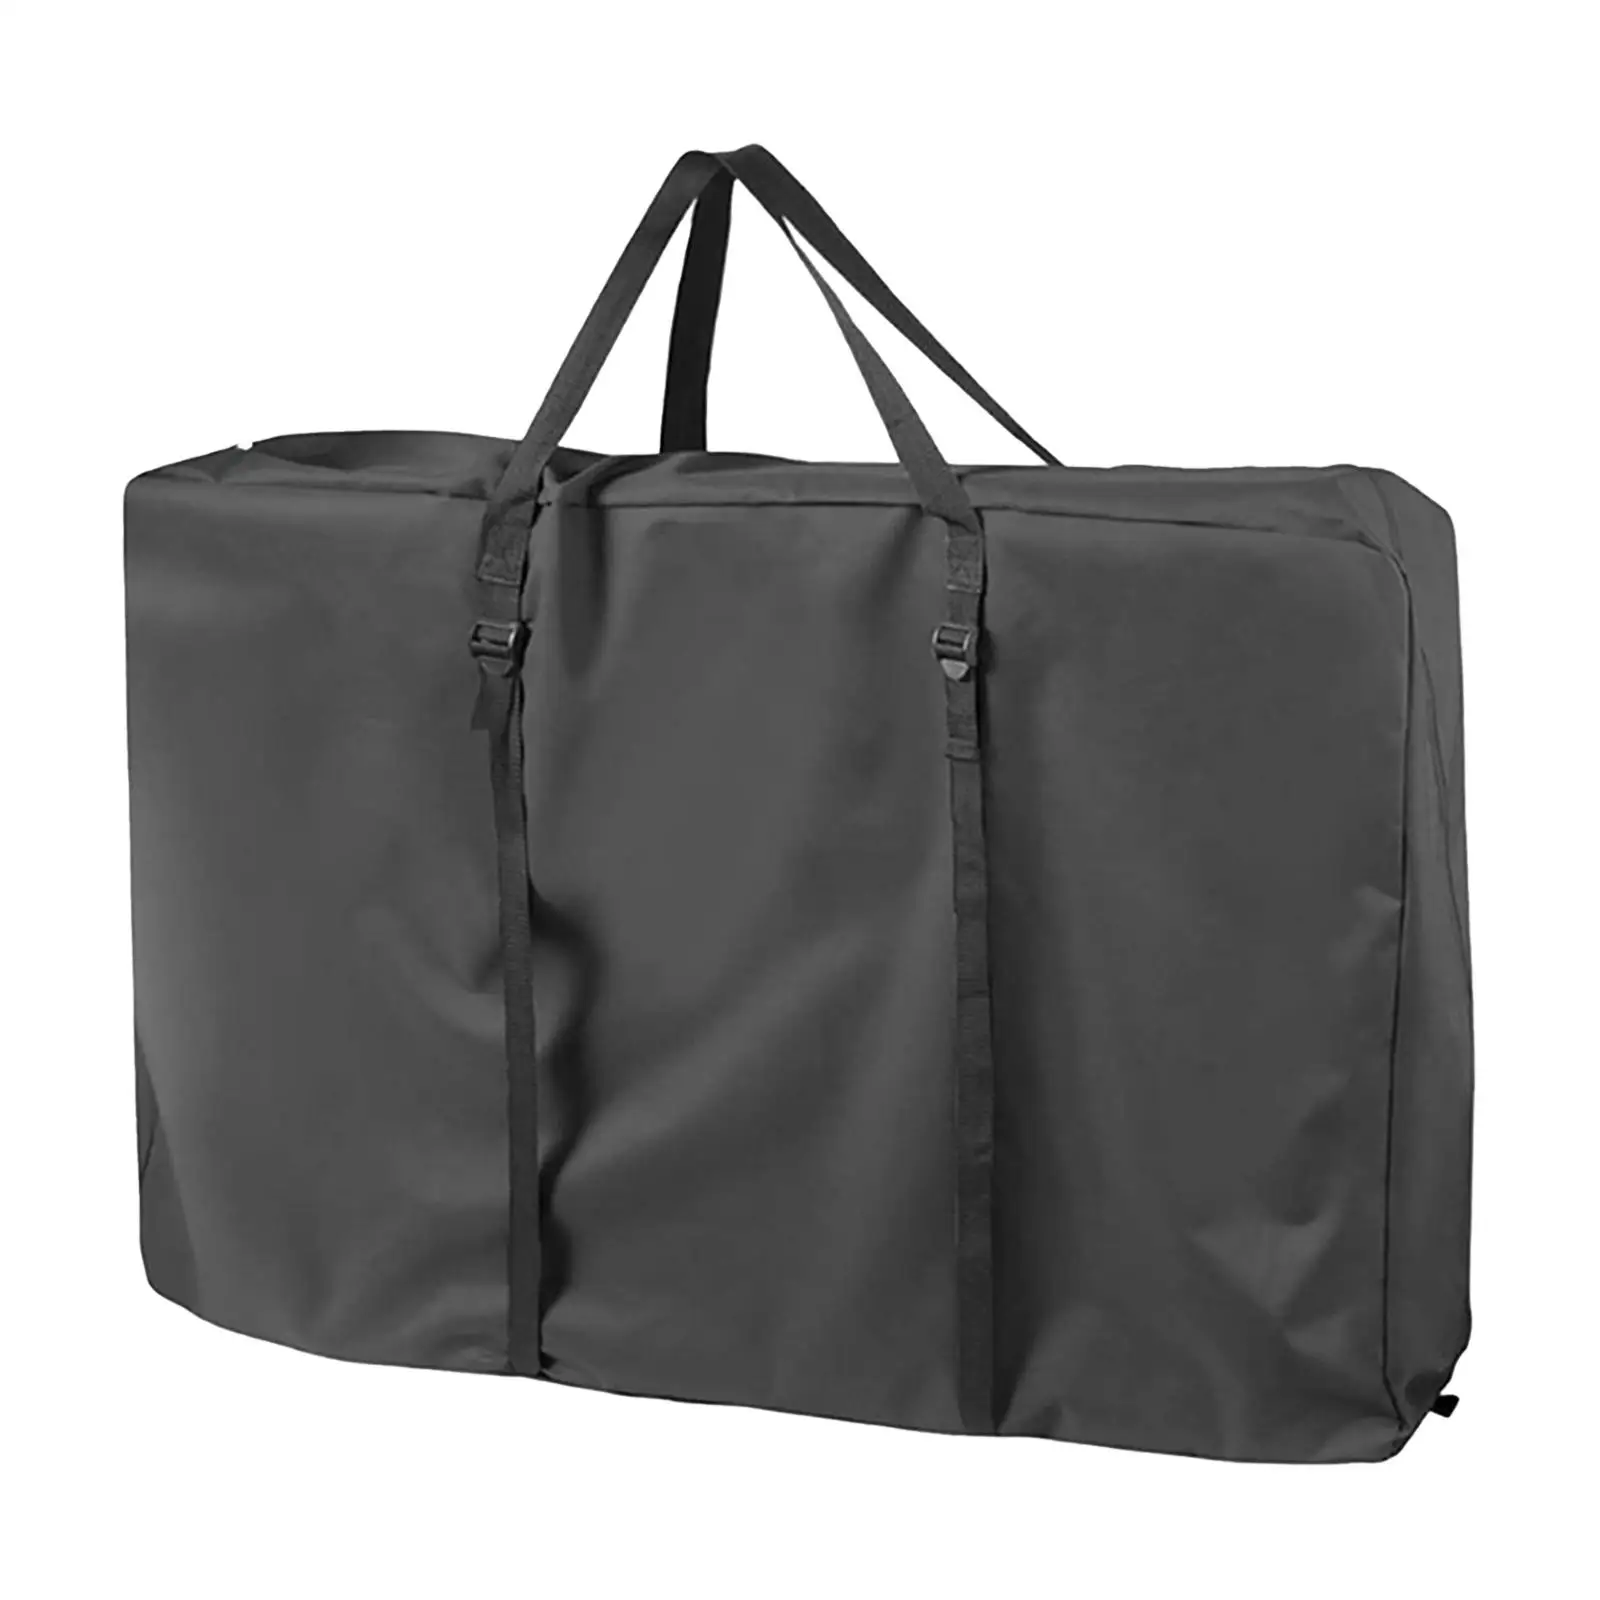 Bag for Wheelchair Travel Organizer Gym Fitness for Transport Bag for Folding Chair Luggage Portable Bike Travel Bag